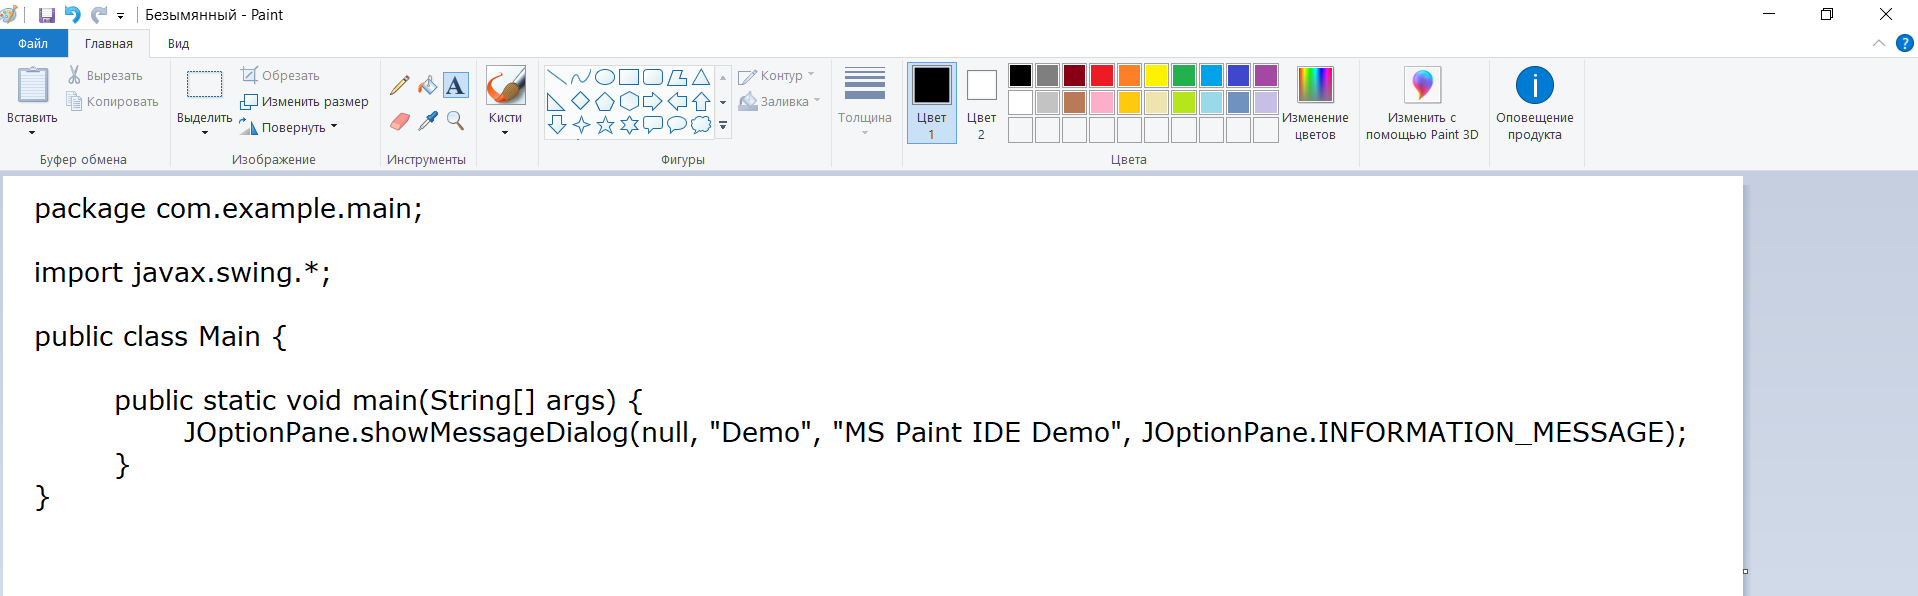 MS Paint — лучшая IDE для Java 1